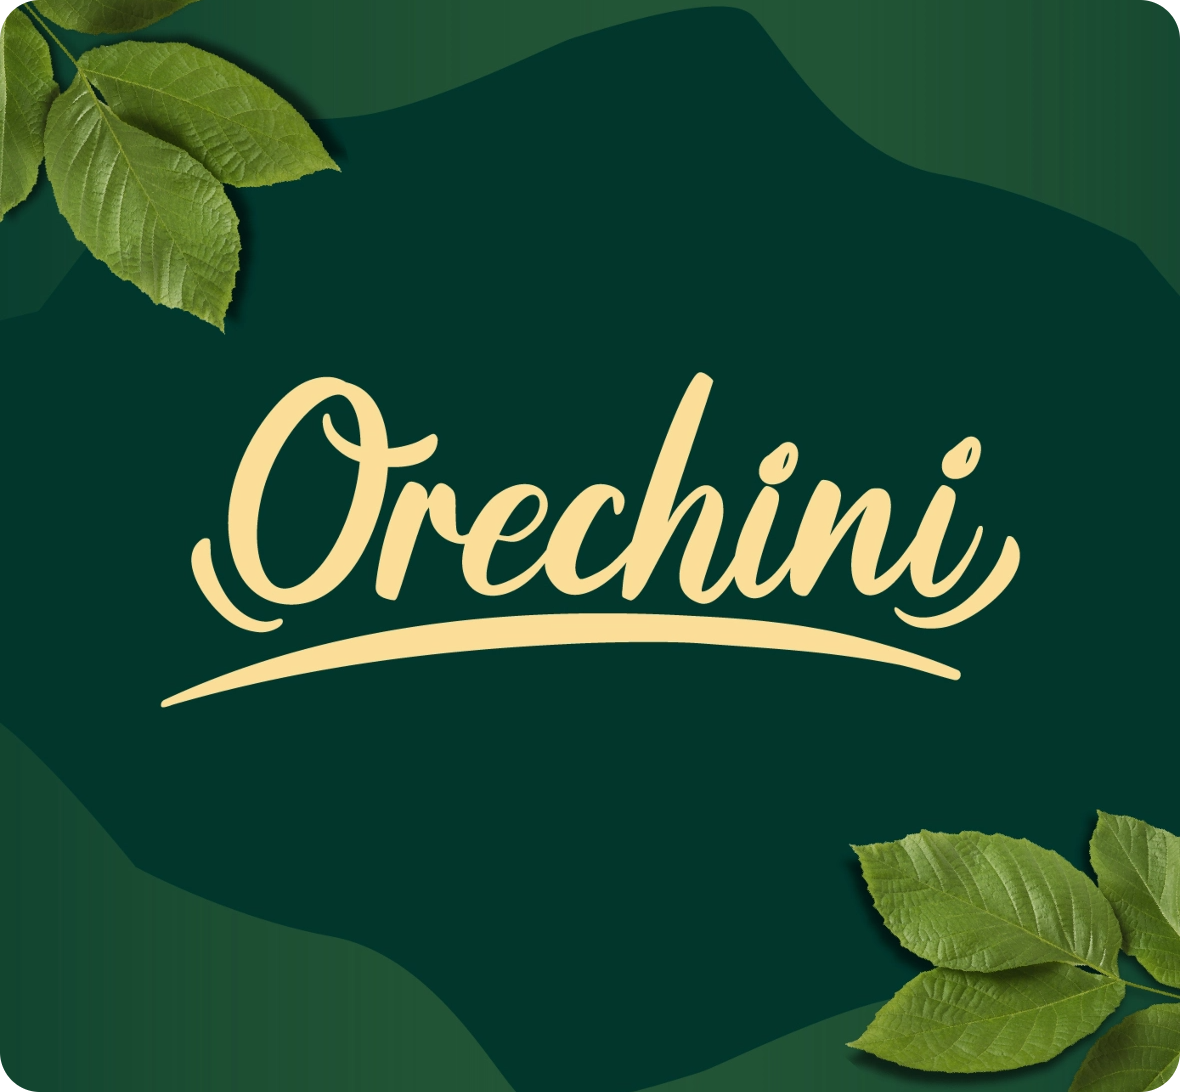 Orechini